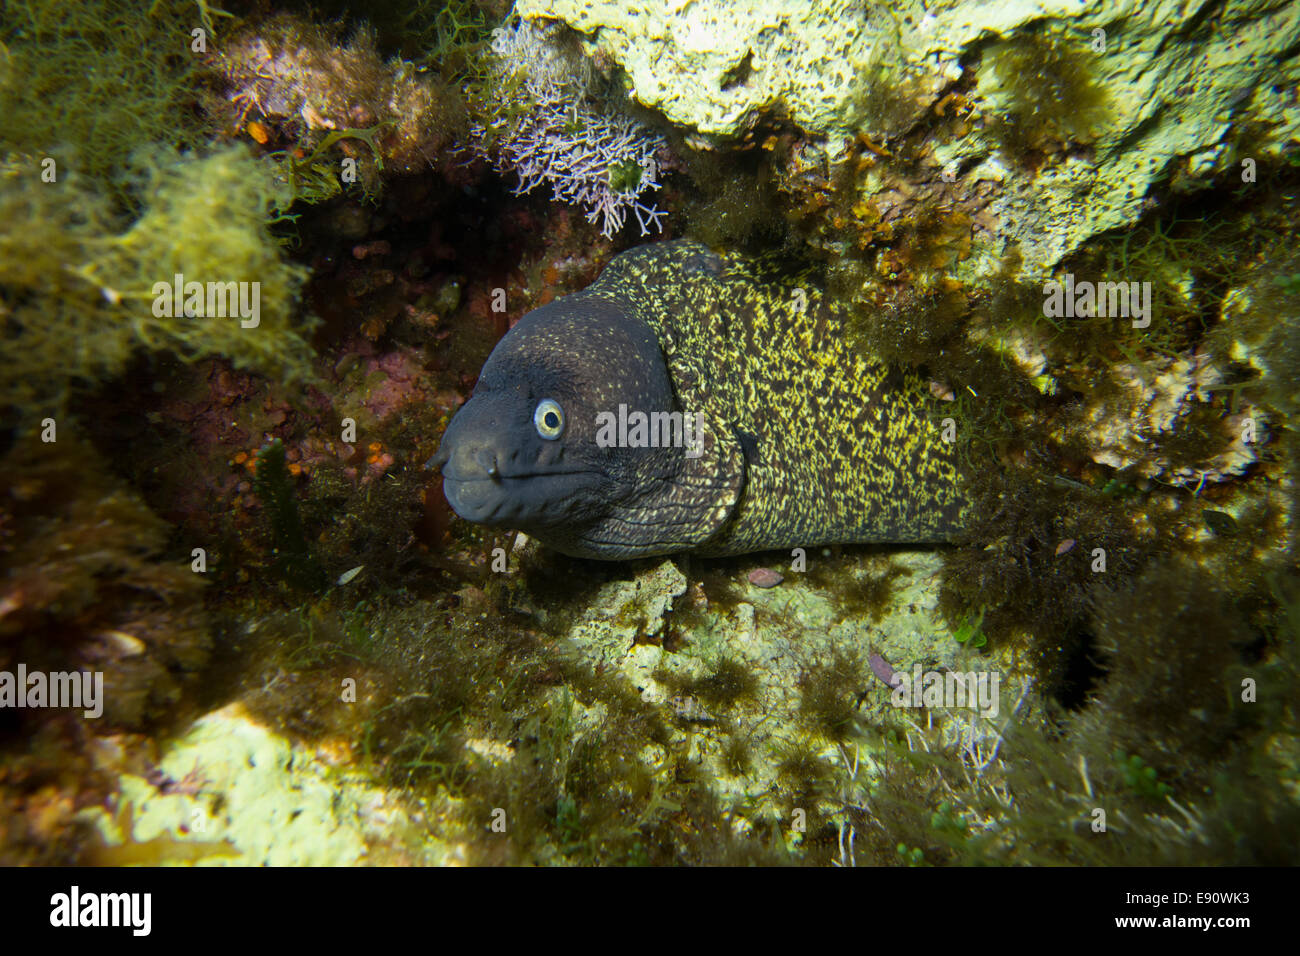 Portrait of a Mediterranean Moray eel (Muraena helena). Stock Photo